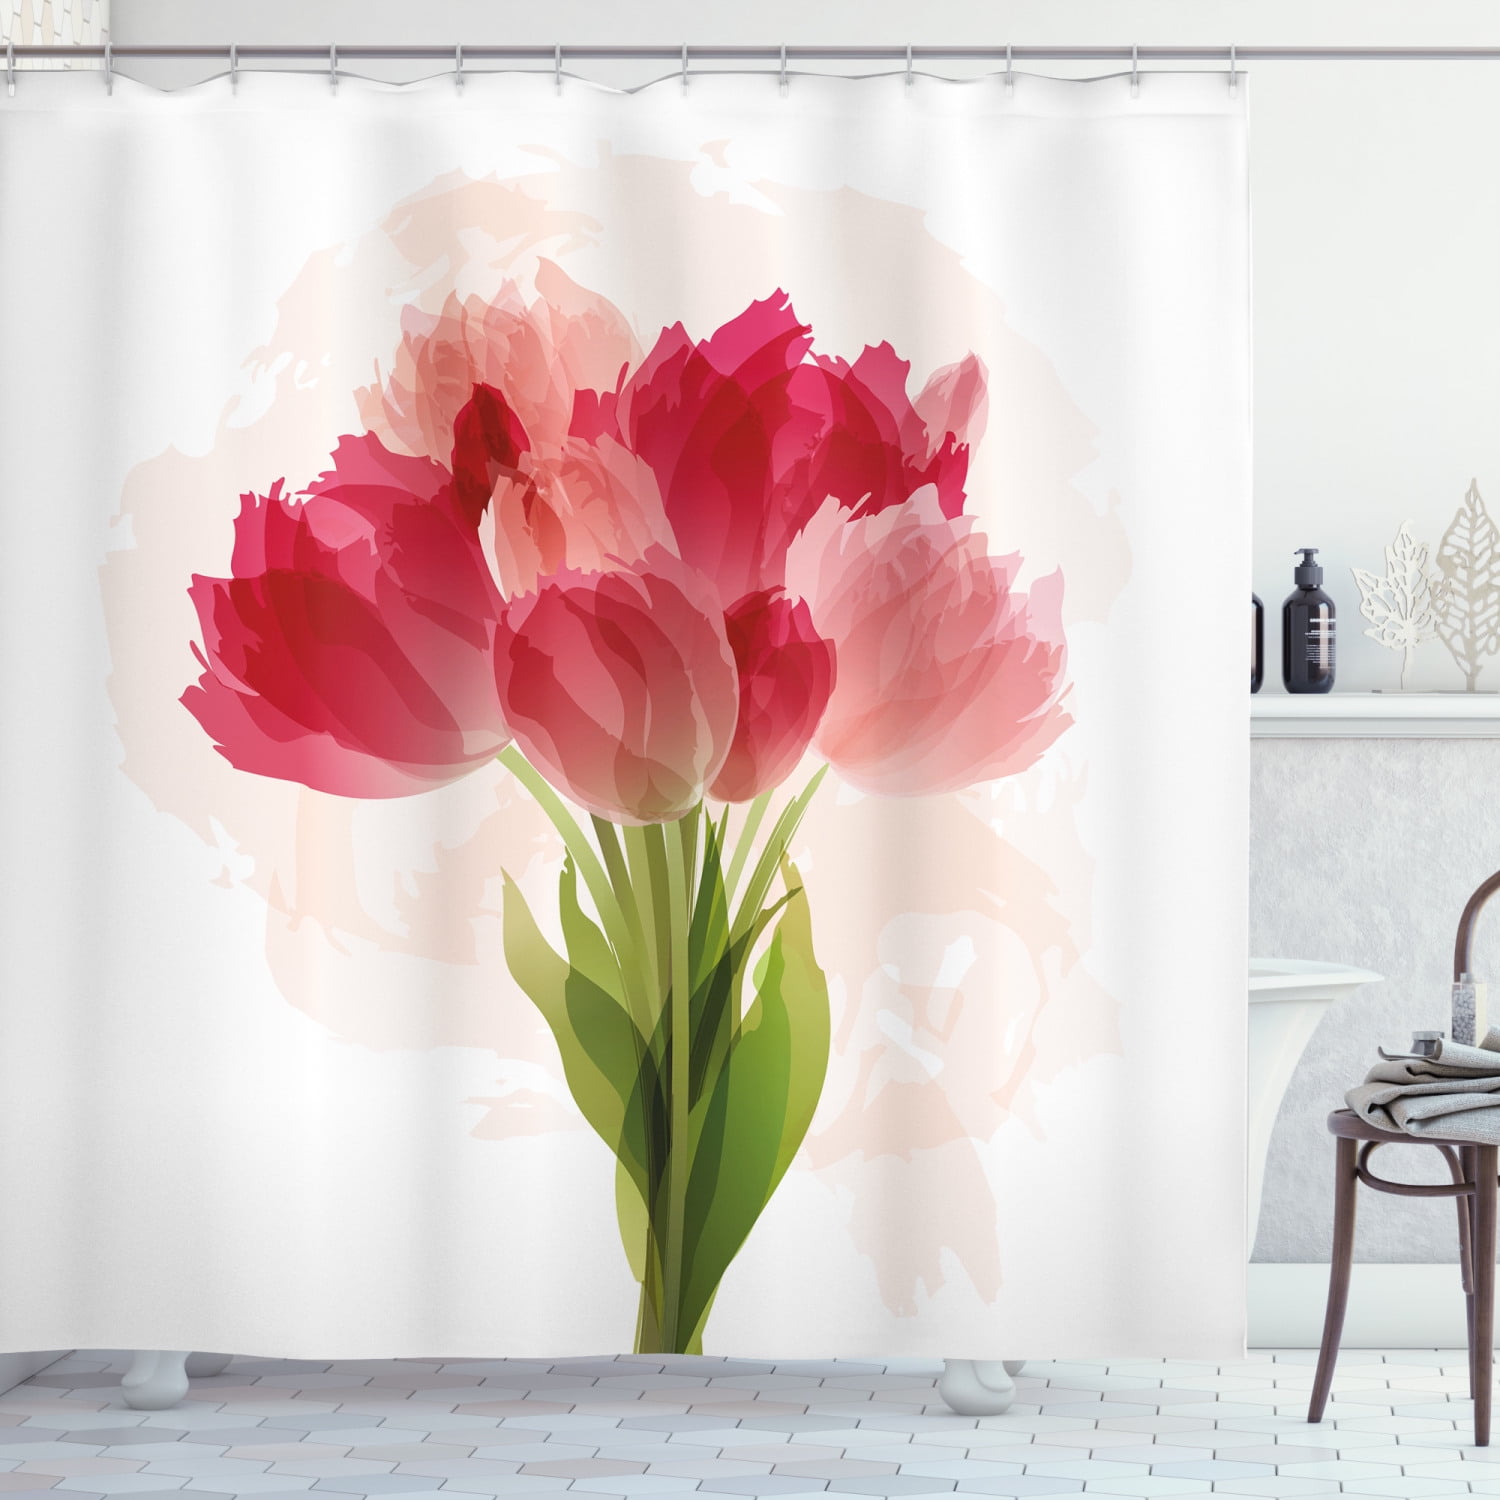 Watercolor Pink Flowers Bathroom & Hooks Waterproof Fabric Shower Curtain Sets 